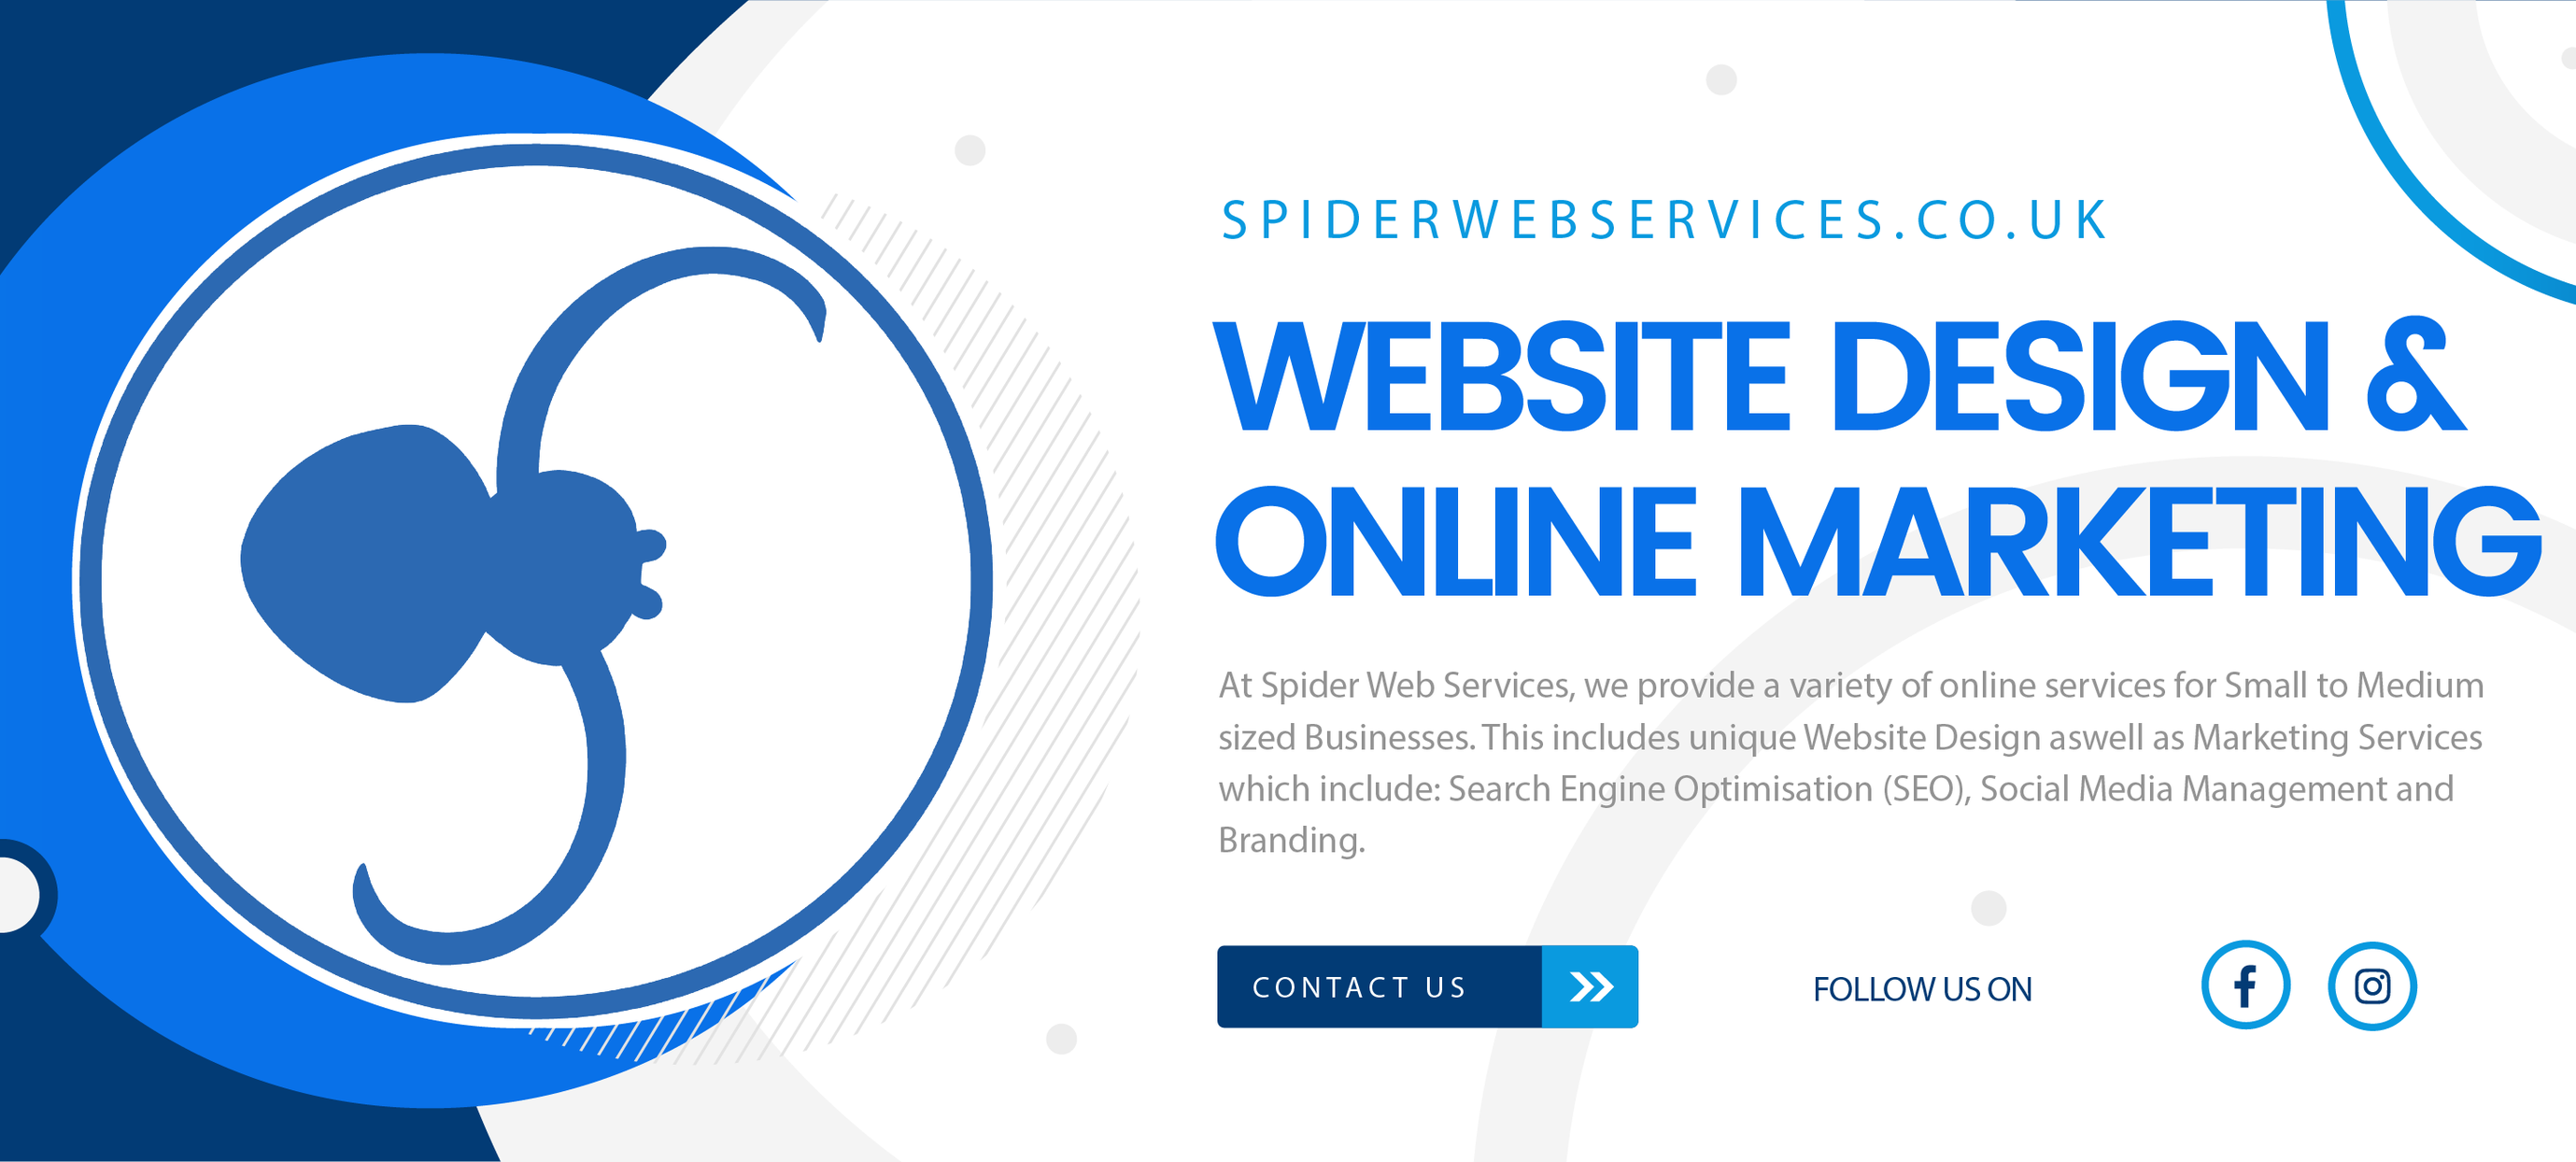 SPIDER WEB SERVICES